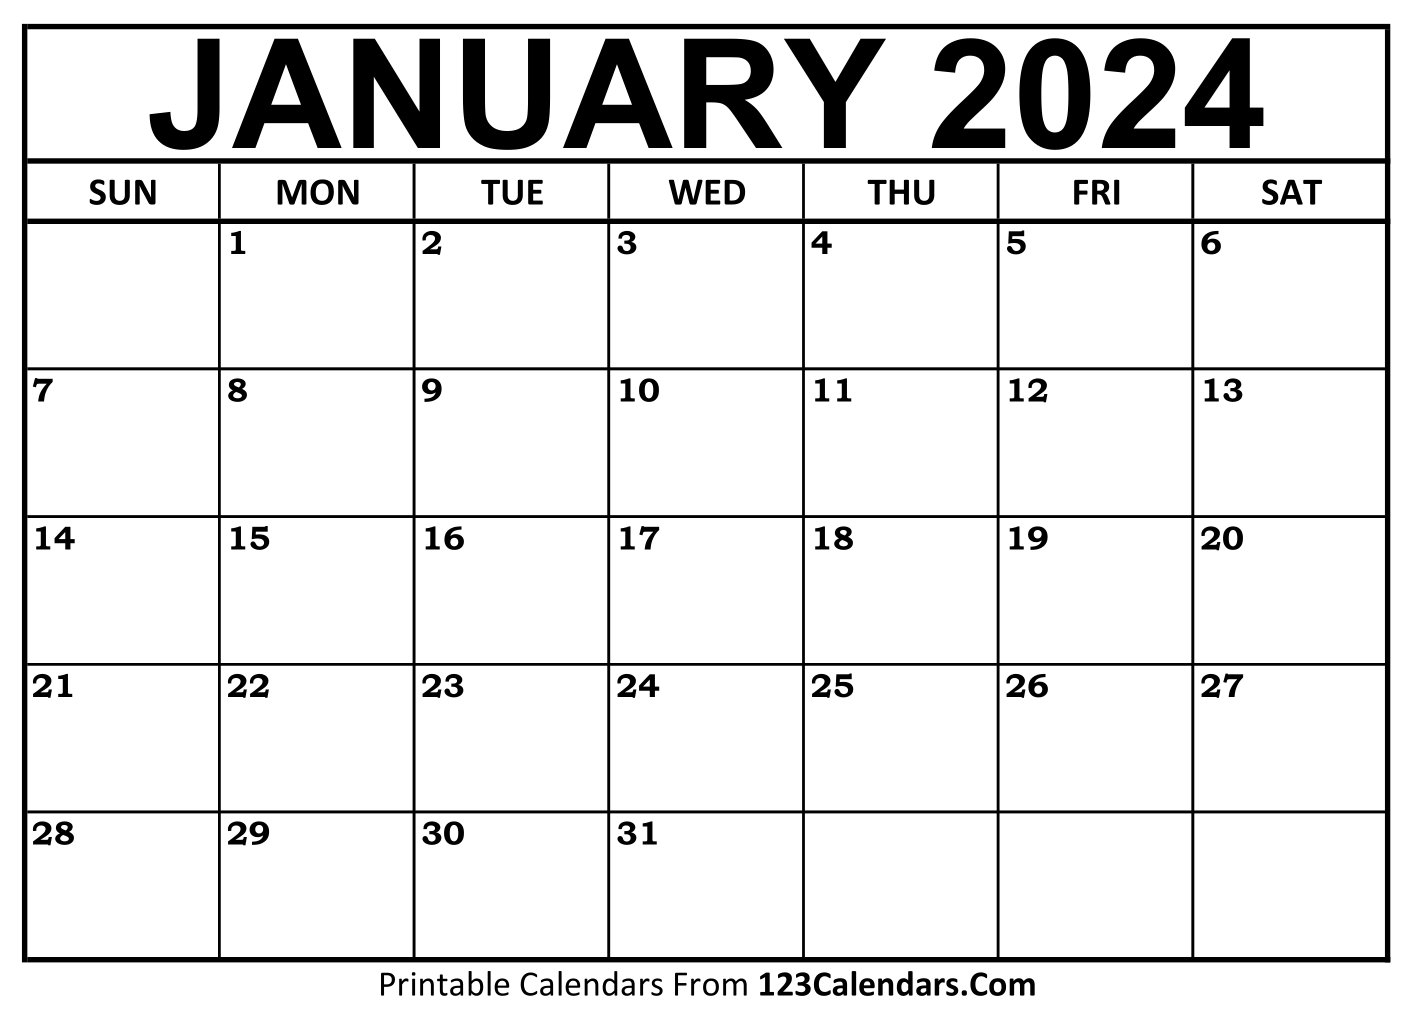 Printable January 2024 Calendar Templates - 123Calendars for Free Printable 2024 Calendar January